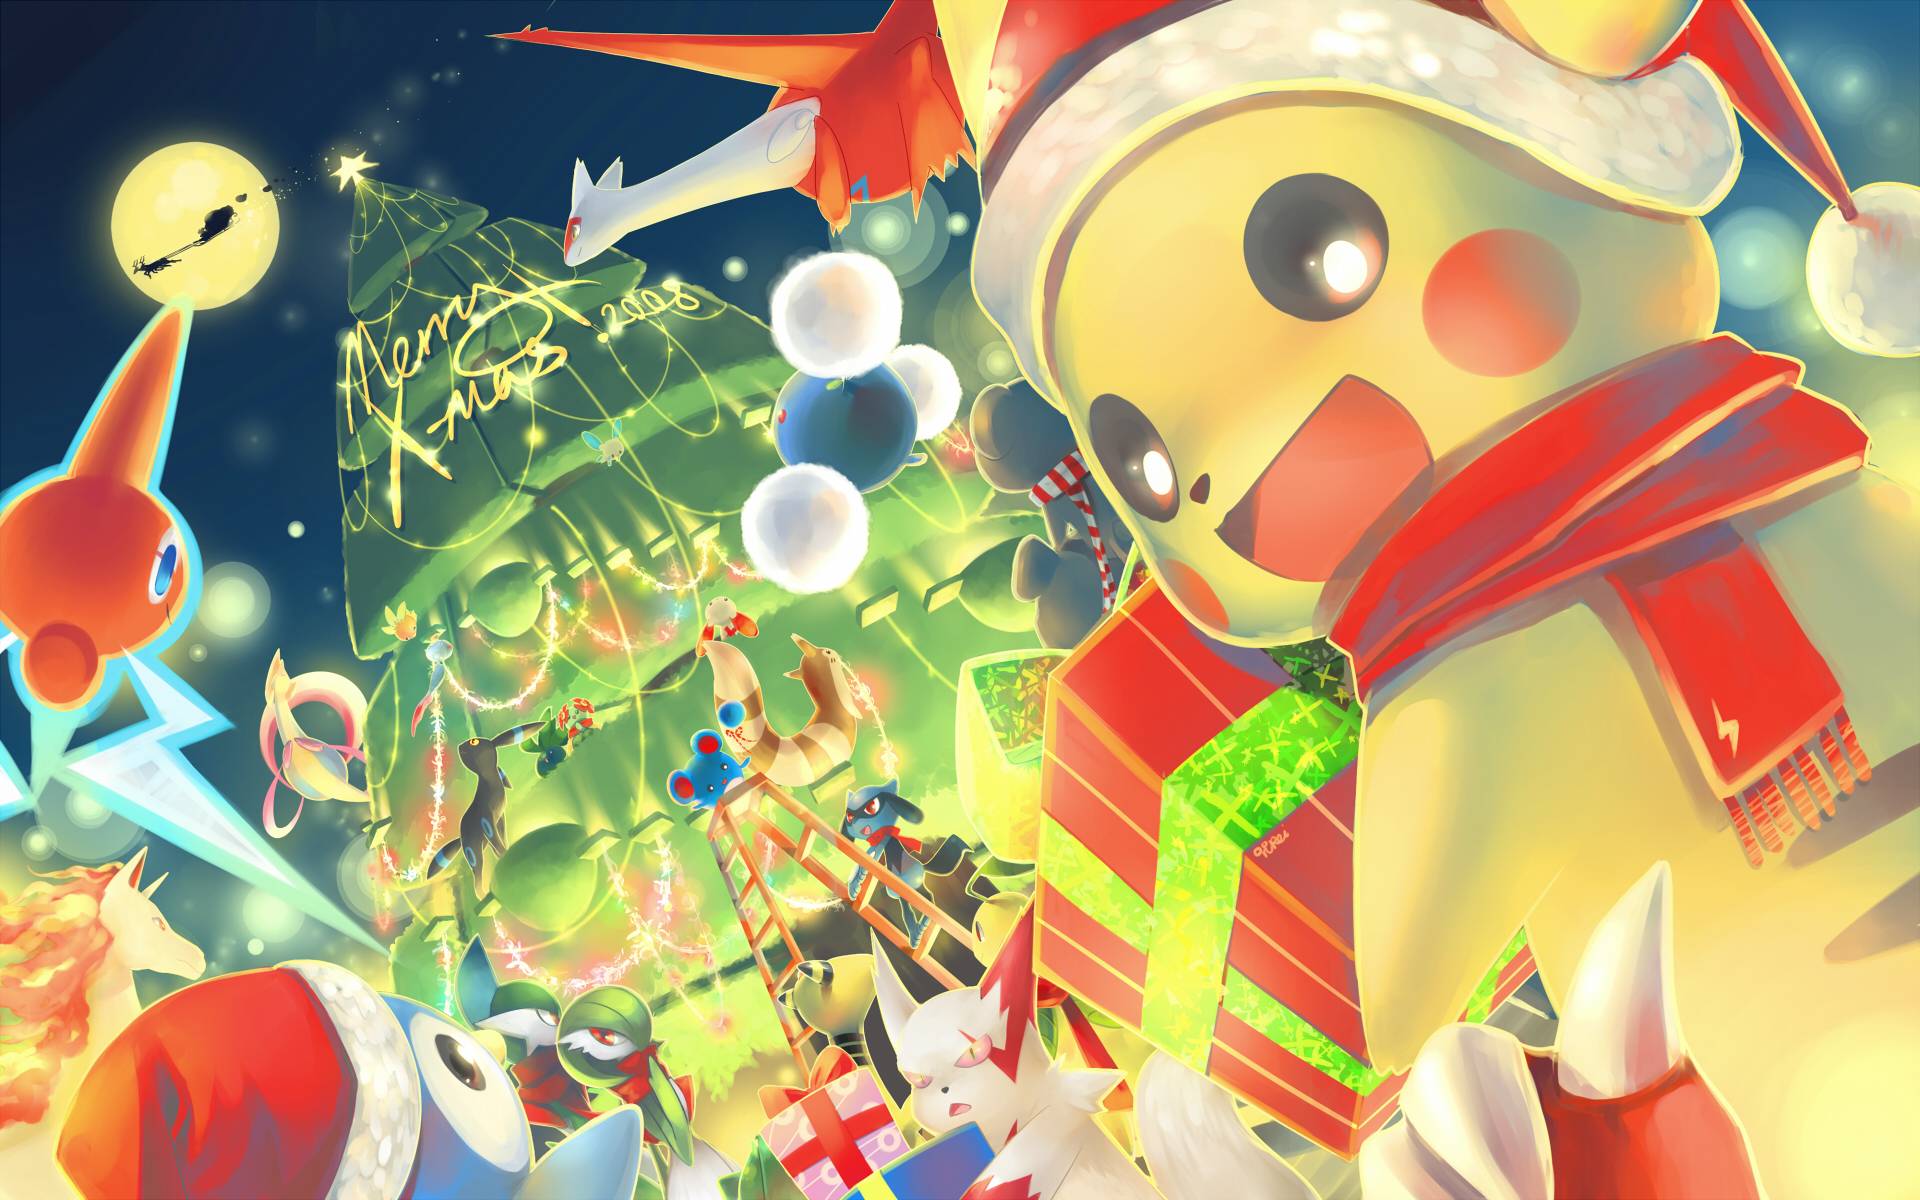 Pokemon Christmas Wallpapers - Wallpaper Cave